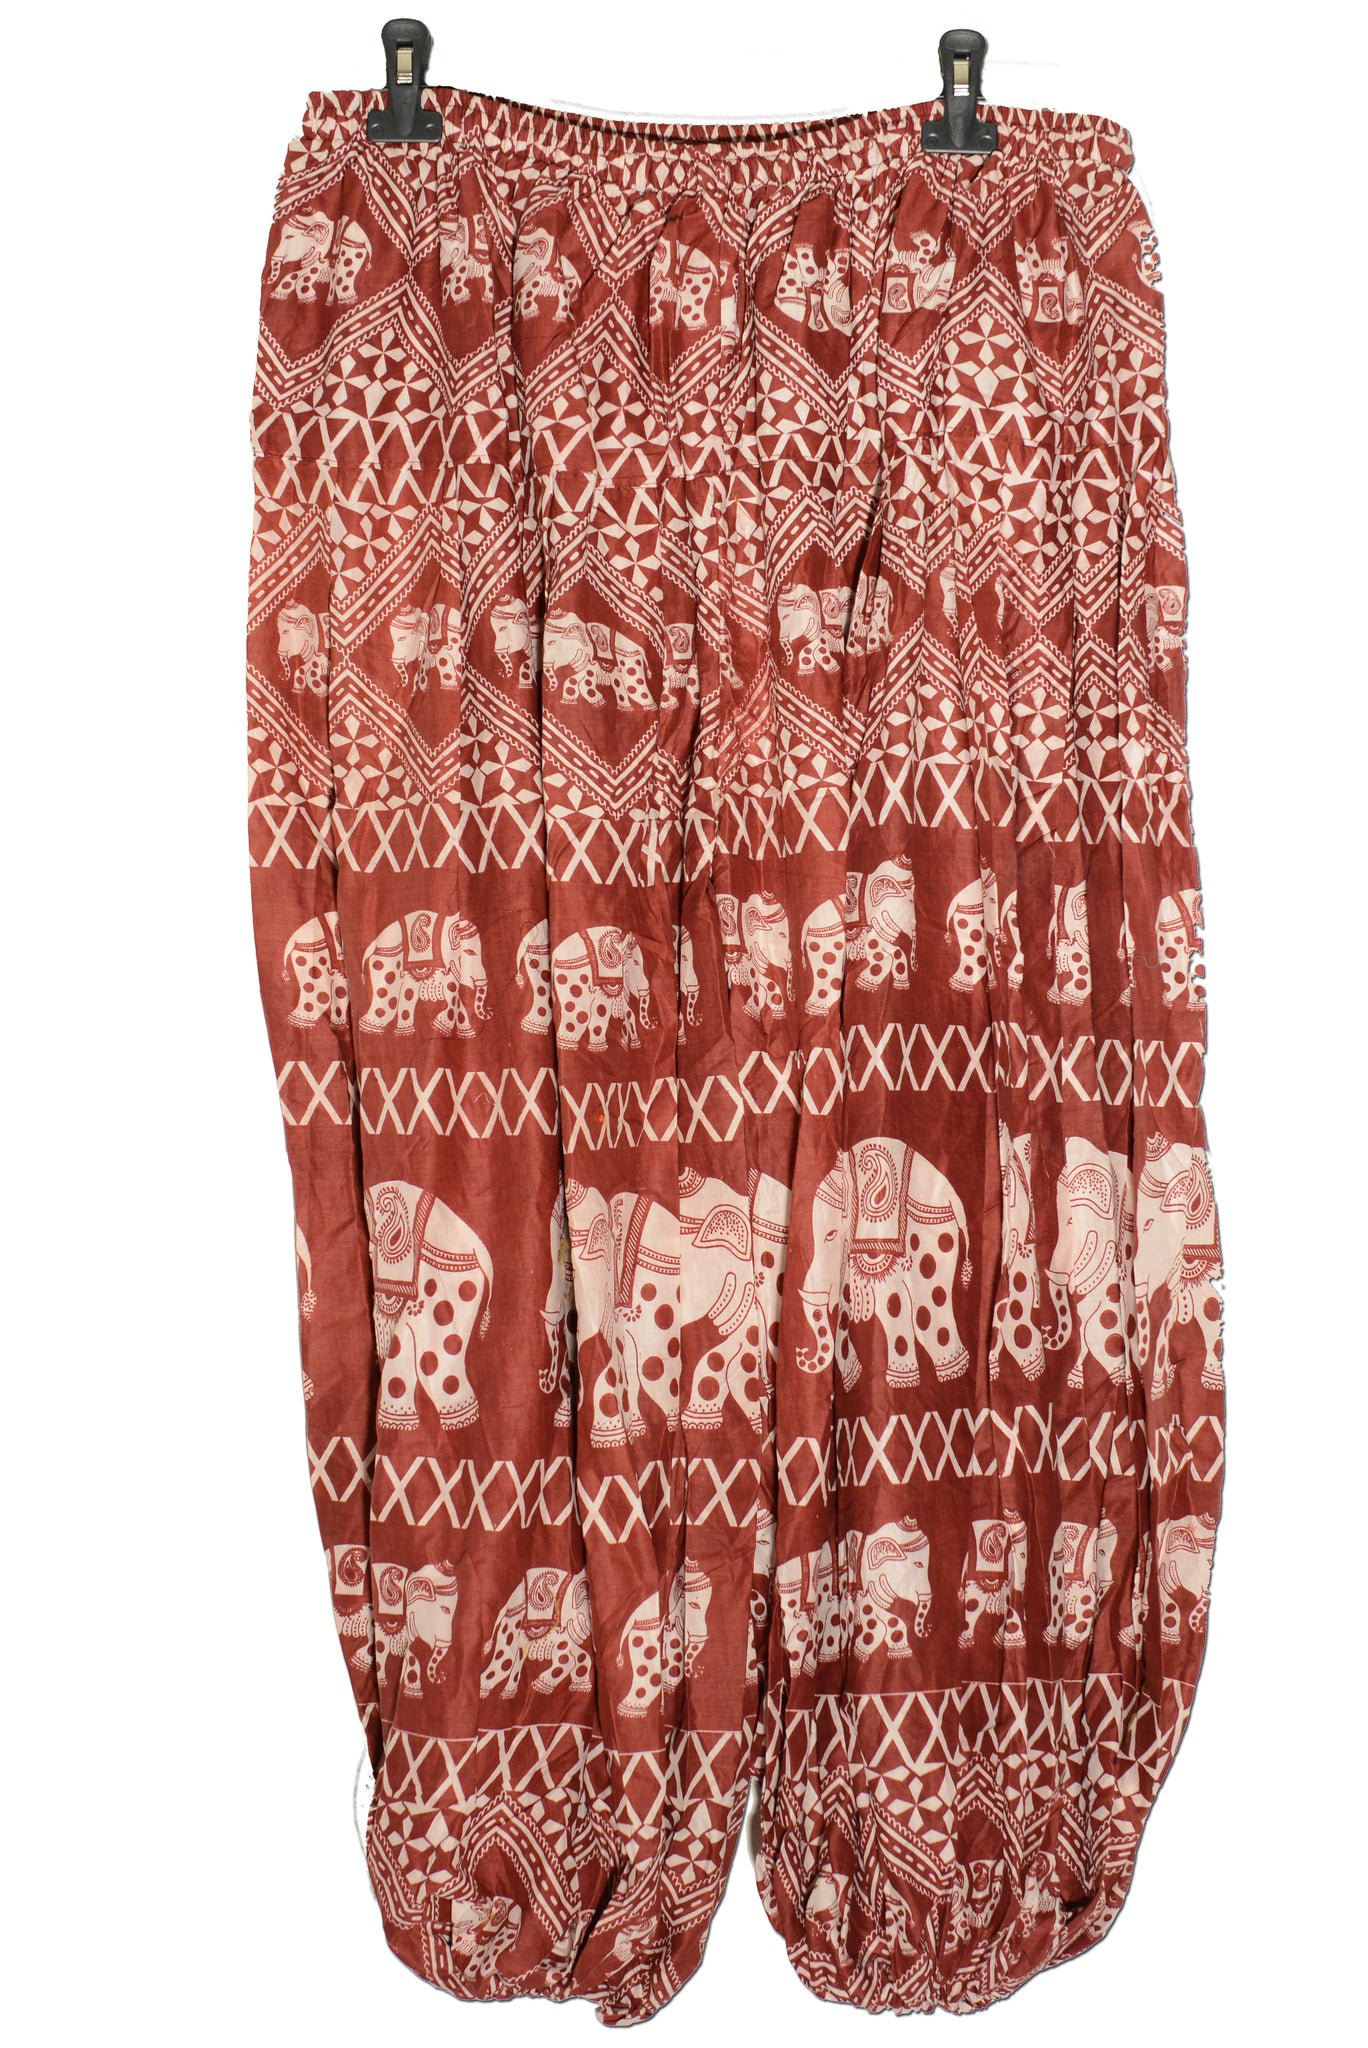 Burgundy cotton pantaloon with elephant print